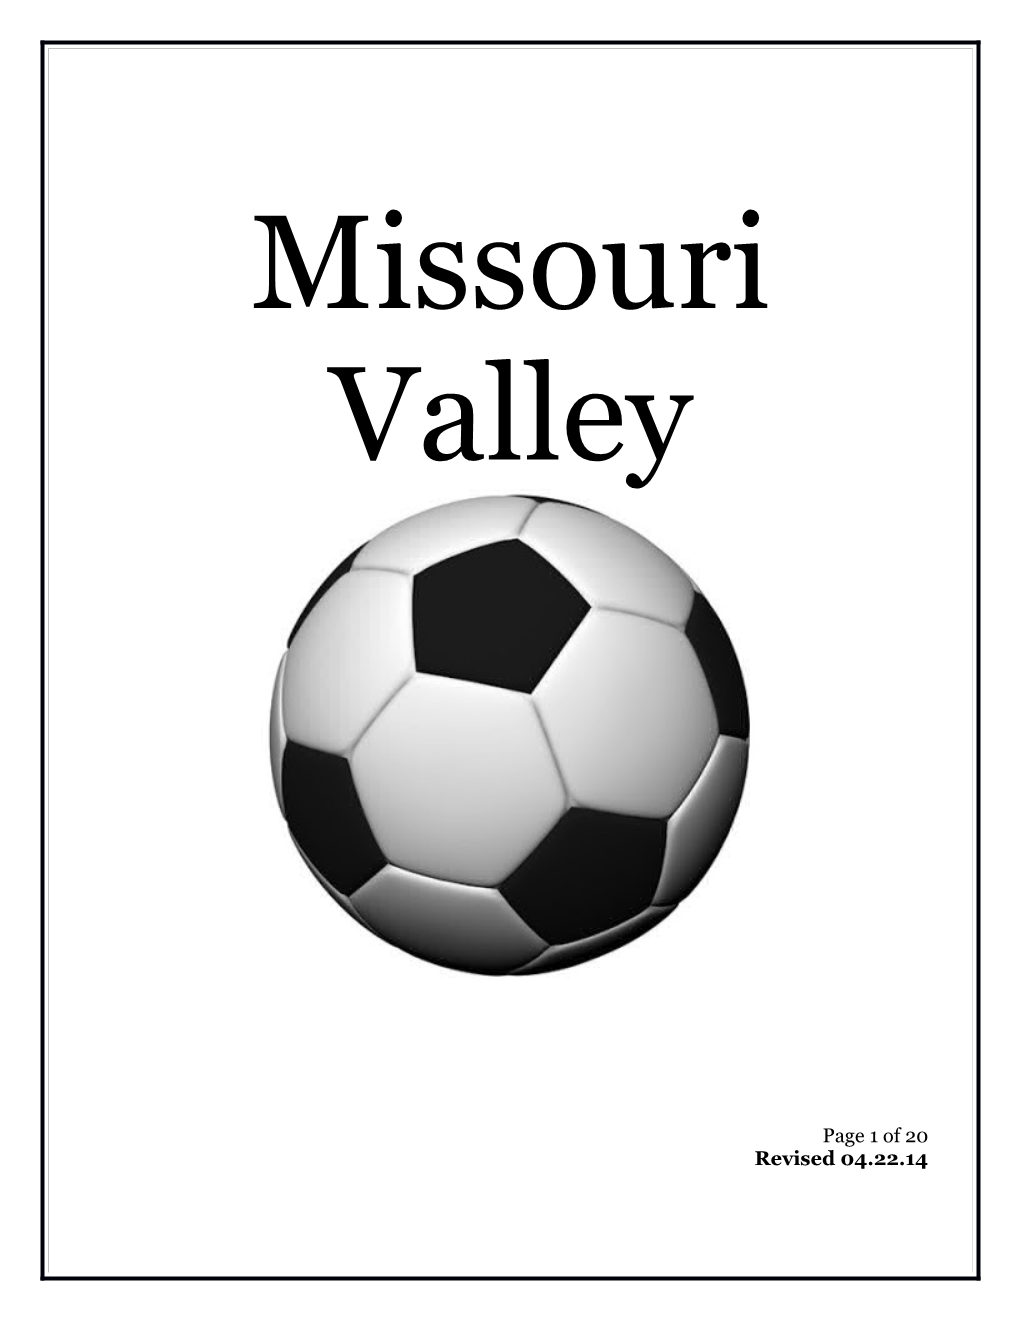 Missouri Valley Soccer Club Mission3